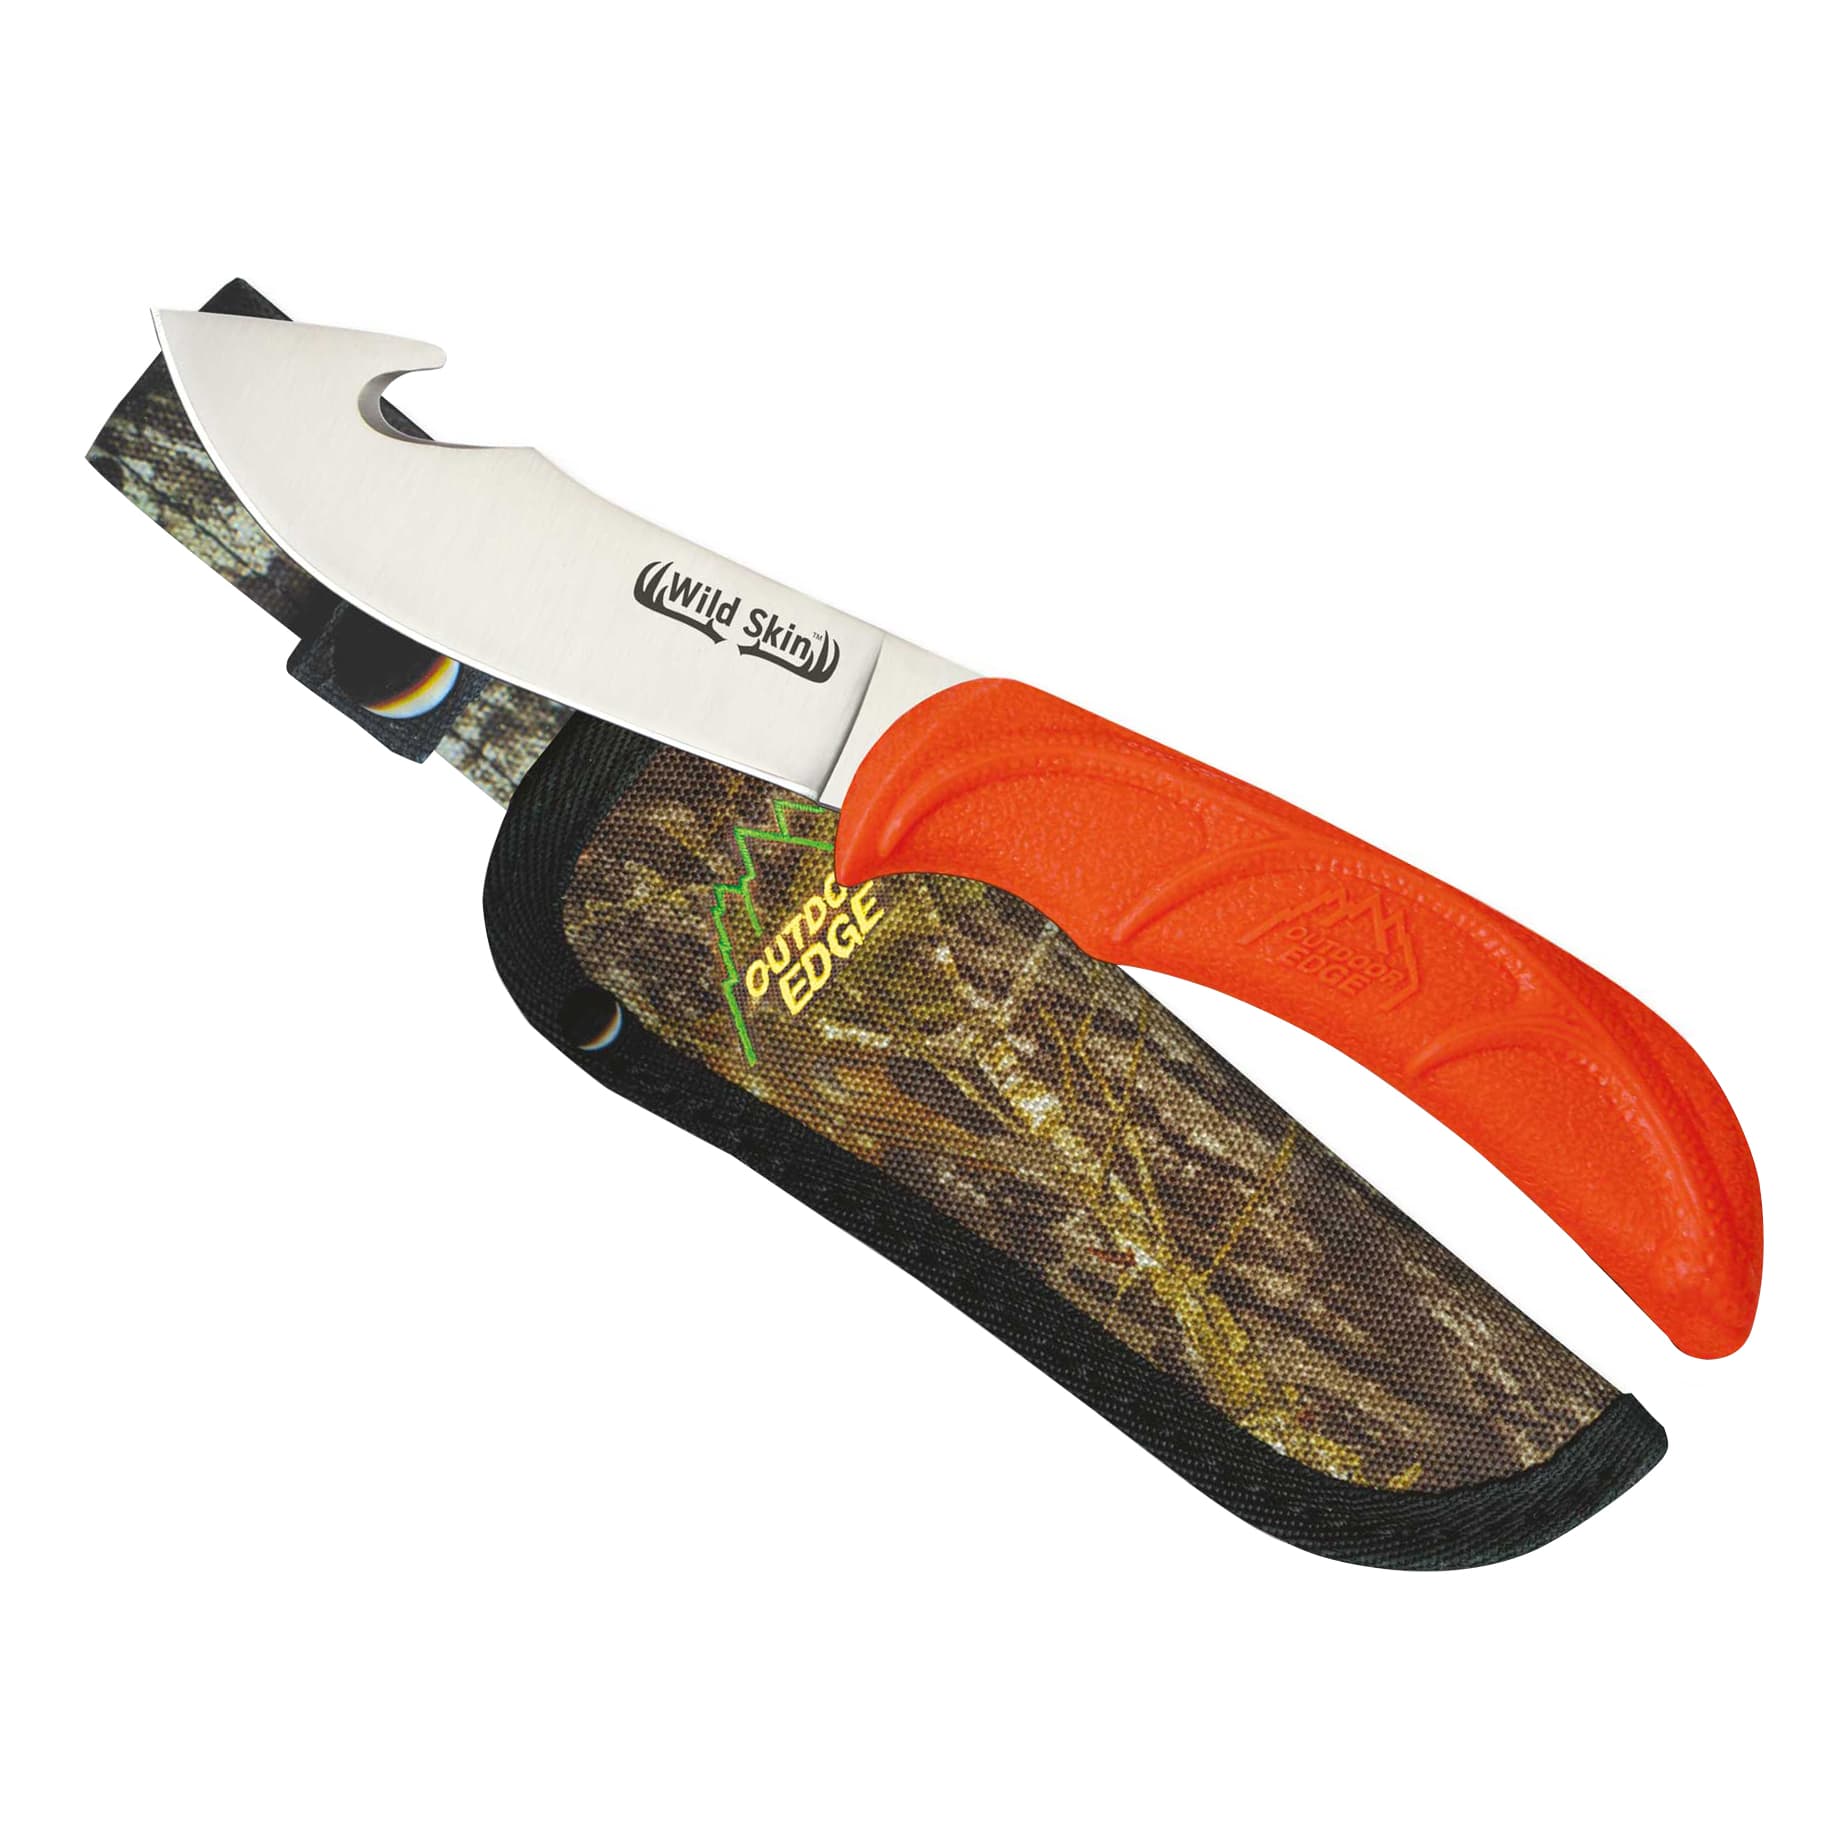 Outdoor Edge Wild Skin Fixed Blade Knife